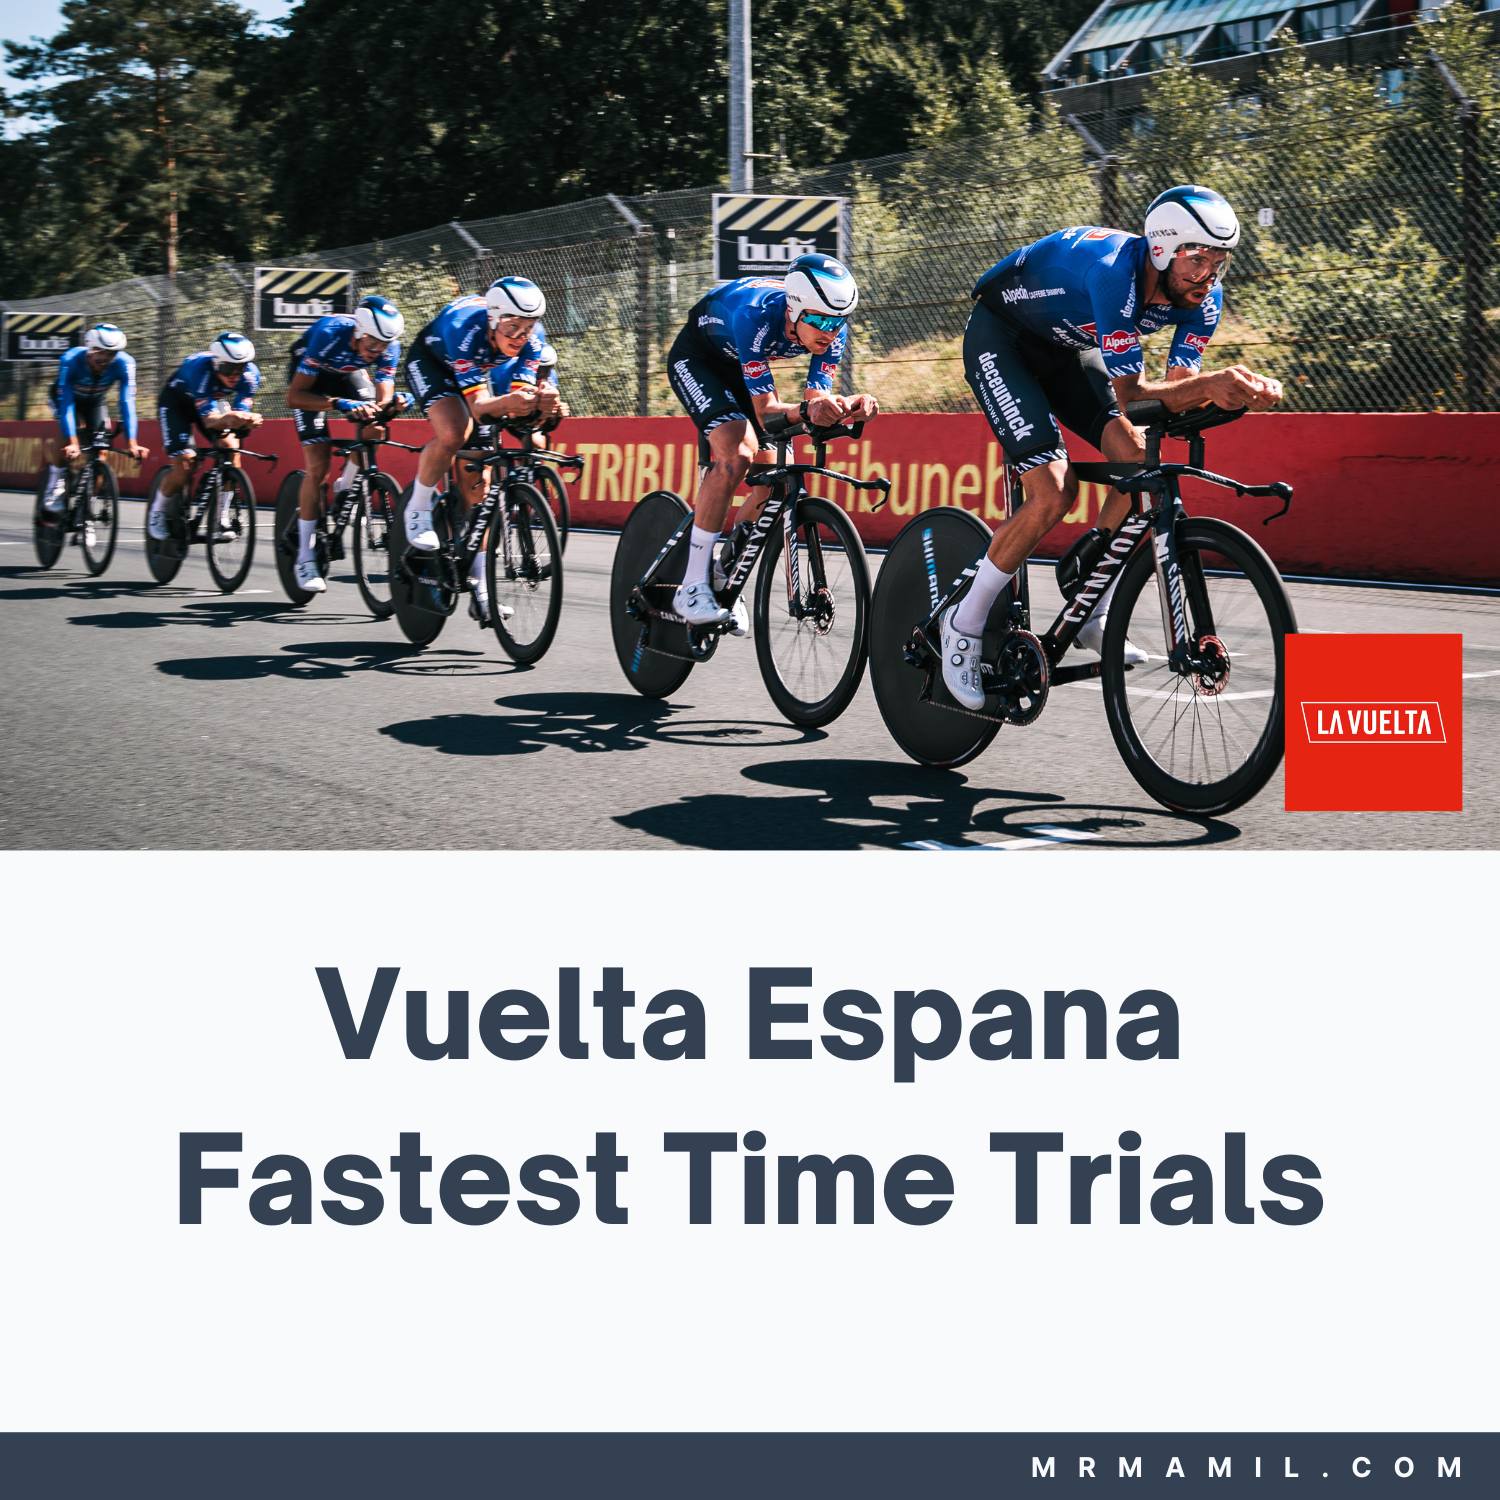 Vuelta Espana Fastest Time Trials